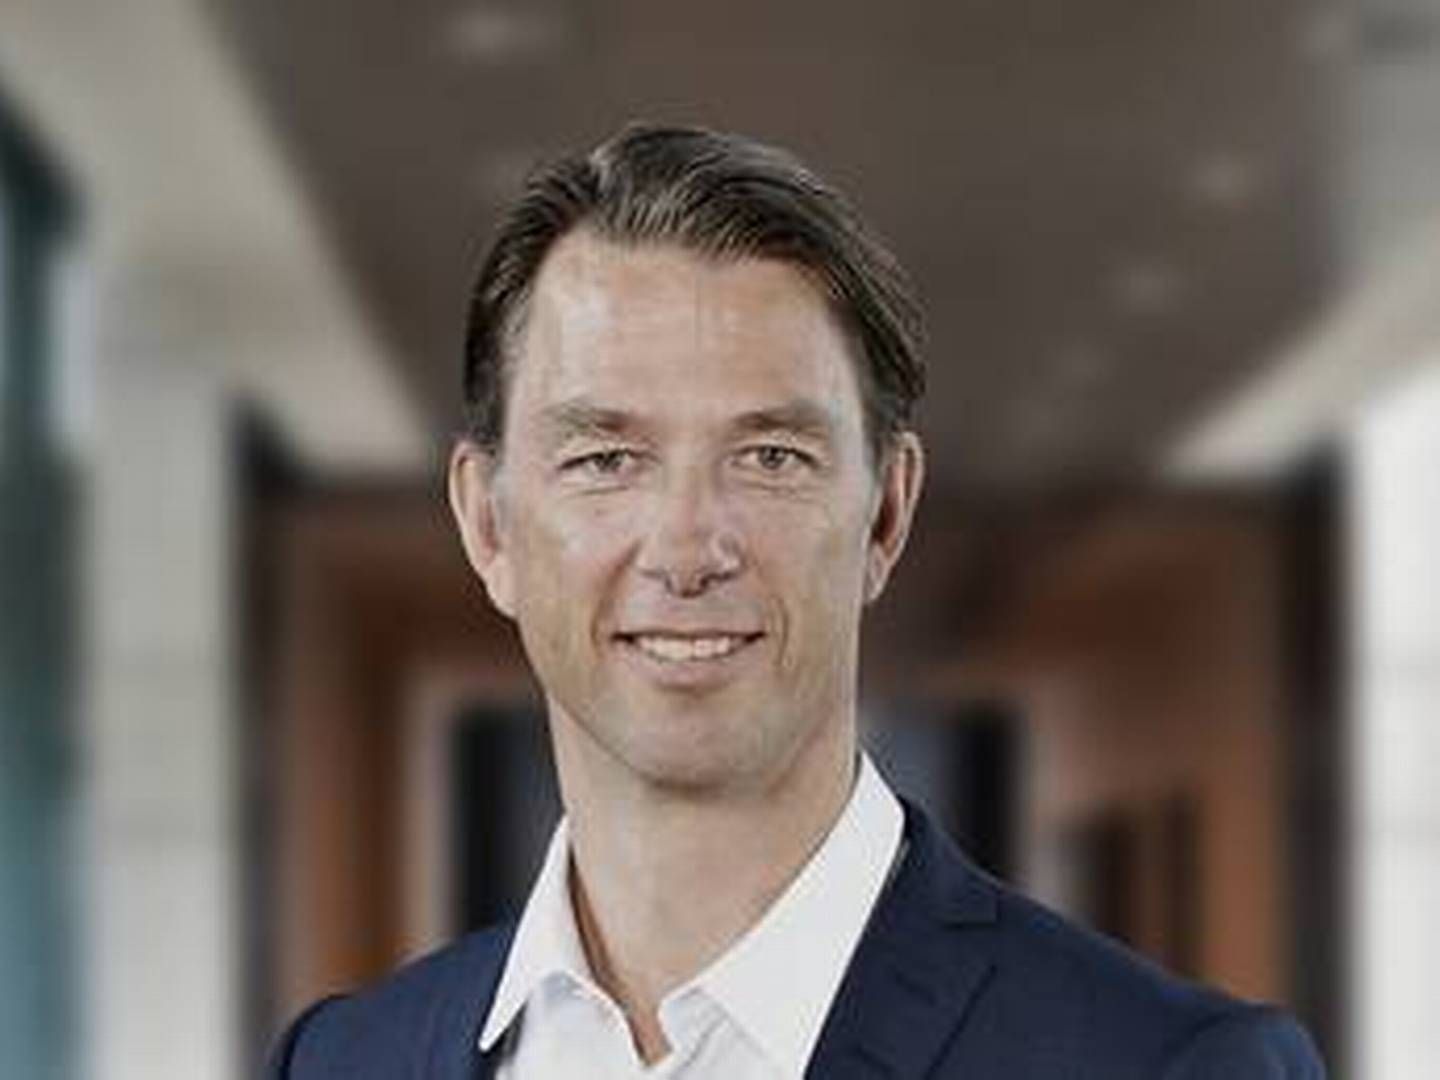 Eric Pedersen, Head of Responsible Investments at Nordea Asset Management. | Photo: Nordea press photo